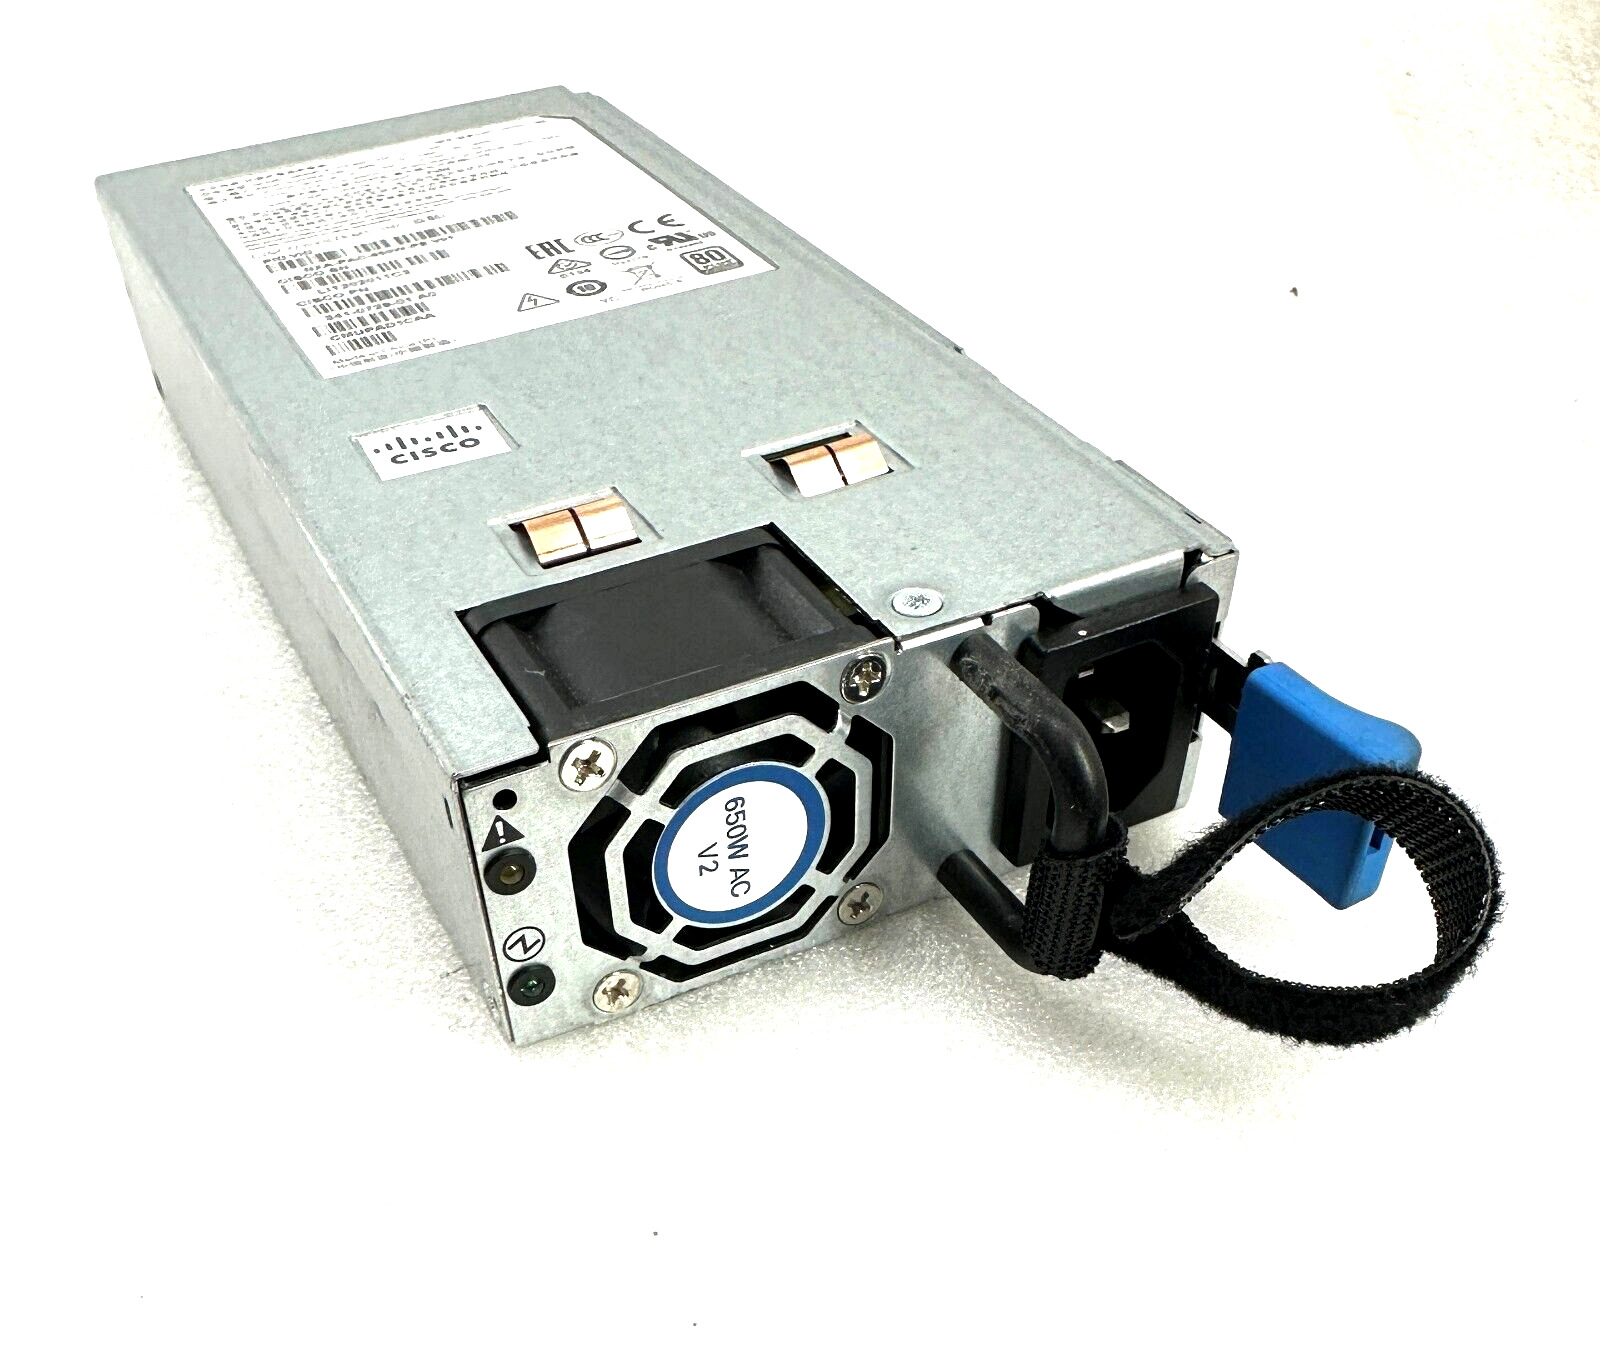 NXA-PAC-650W-PE CISCO Nexus 9000 AC PS, Port-side Exhaust (Blue) PSU